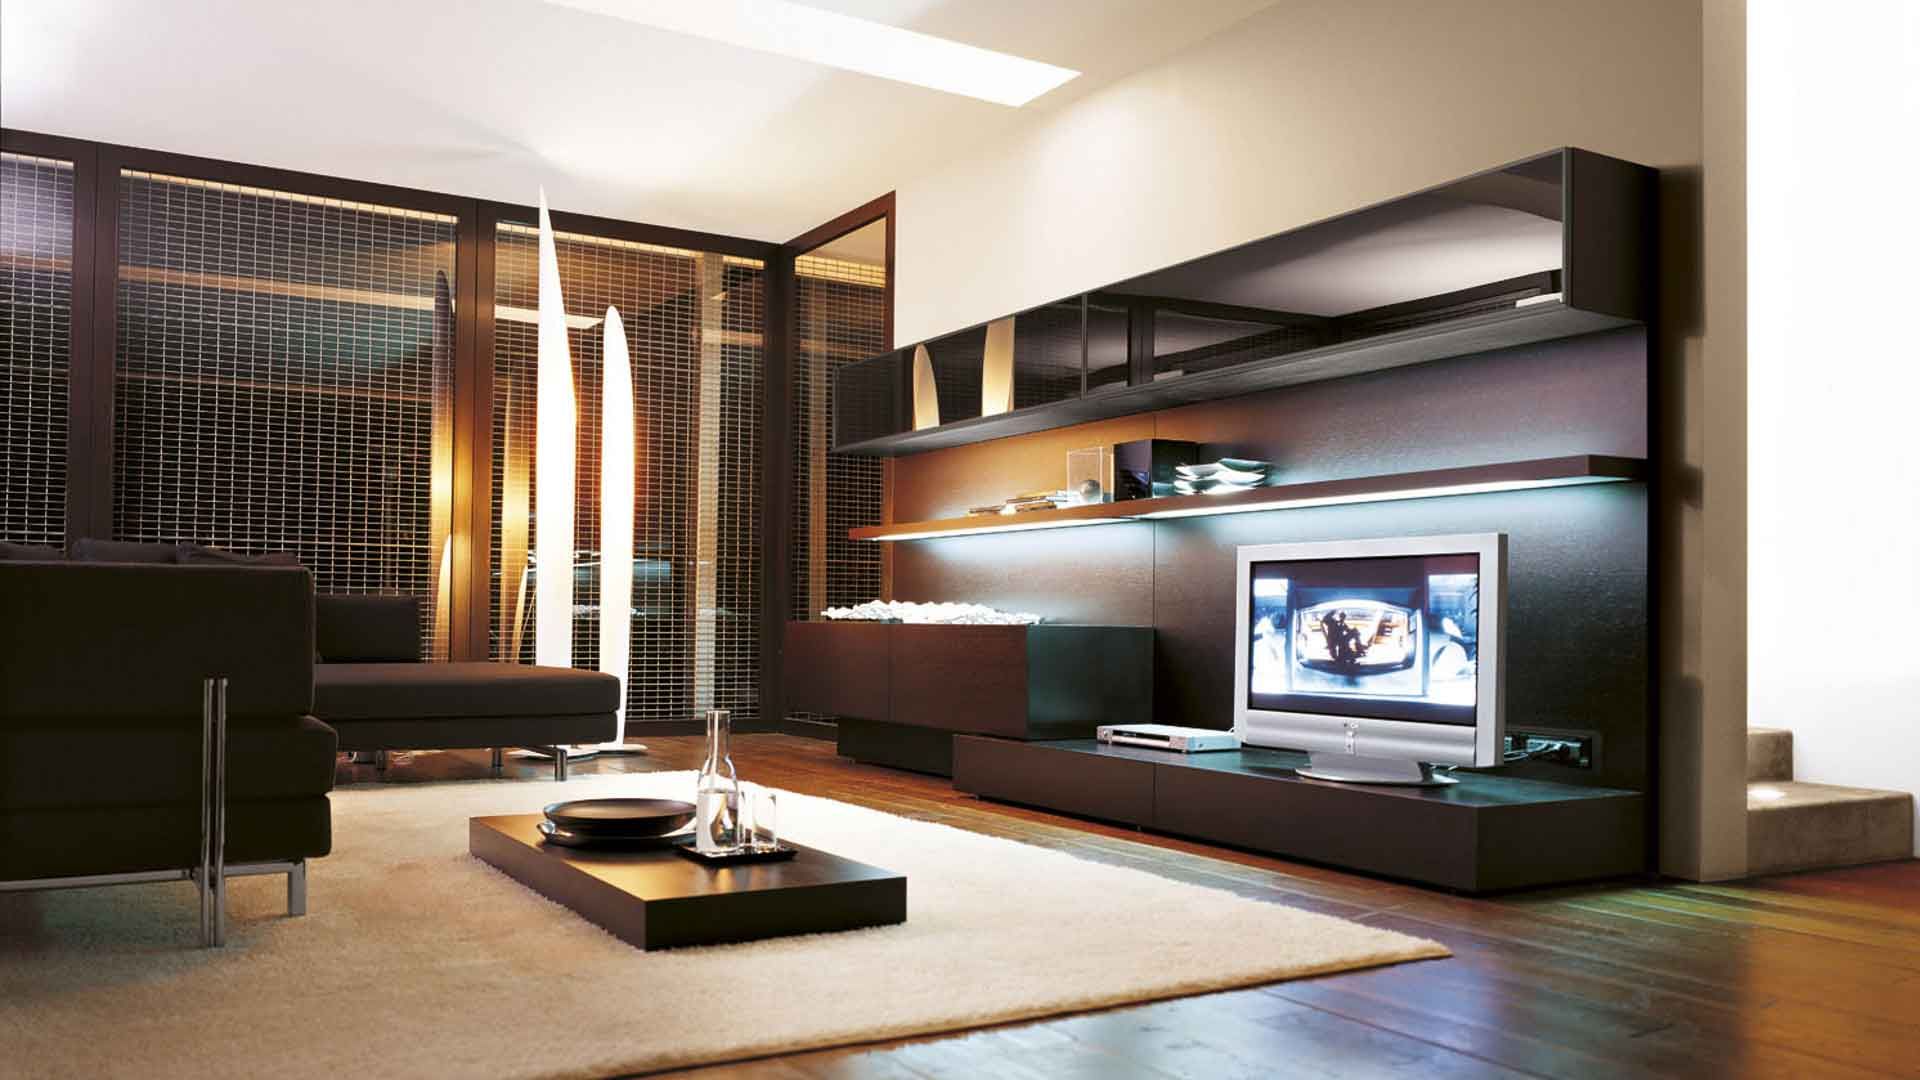 Creating a living room interior using modern modular systems